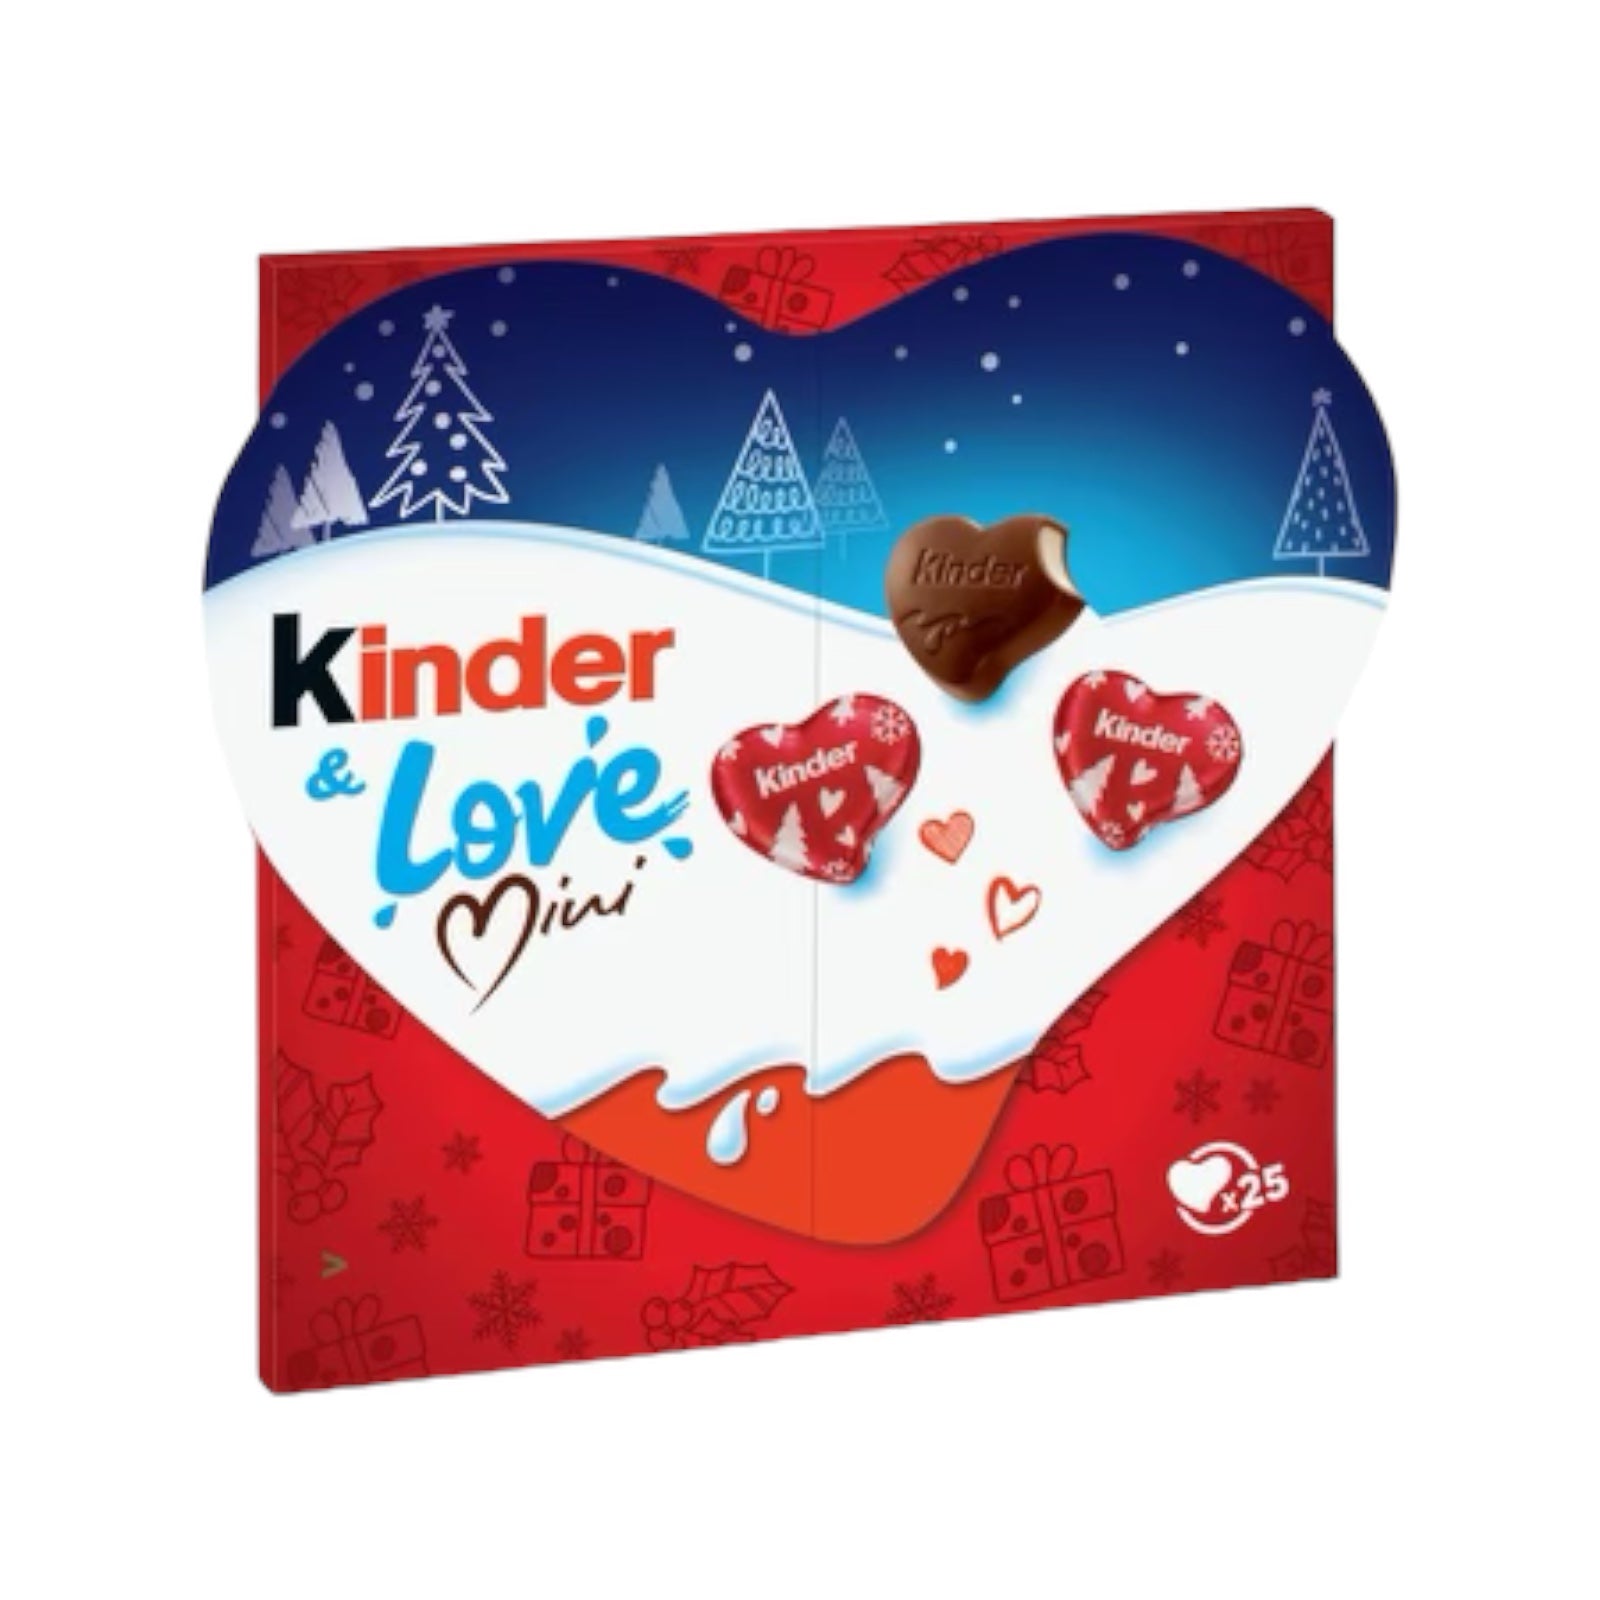 Kinder® & Love Mini Heart Chocolate Box 25-Piece
107g